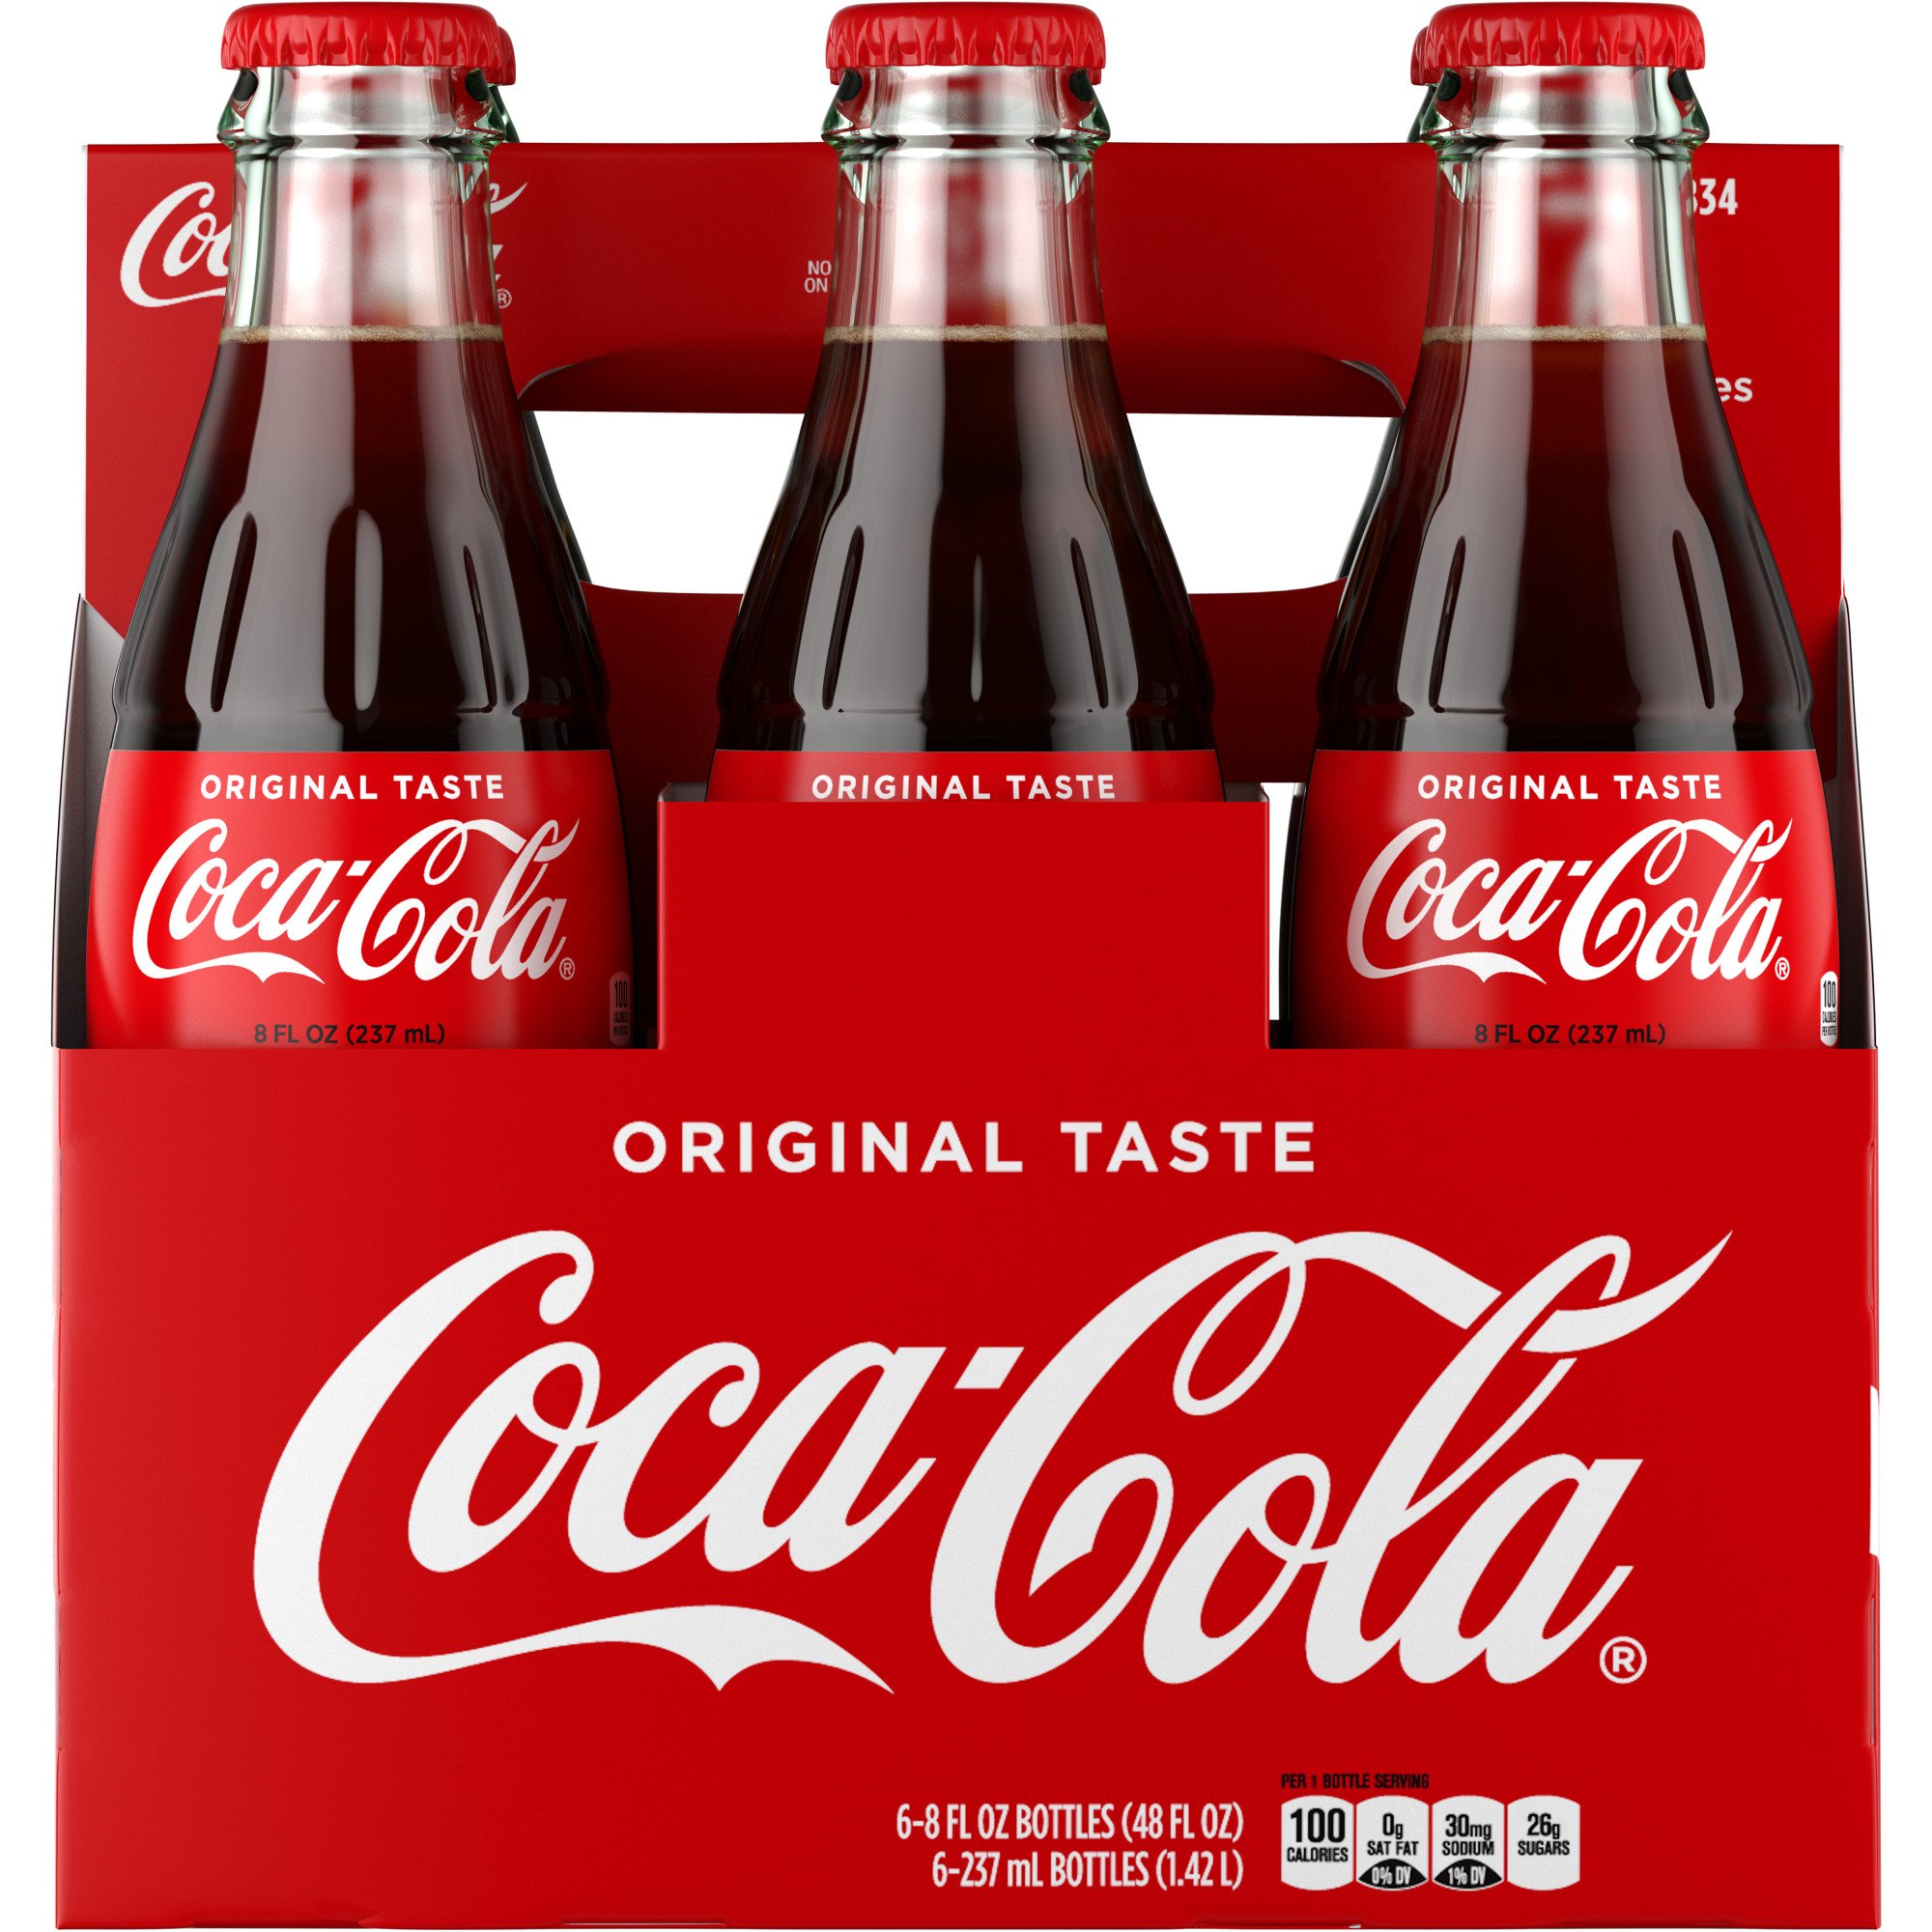 Coca-Cola Classic Coke Mini 7.5 oz Cans - Shop Soda at H-E-B